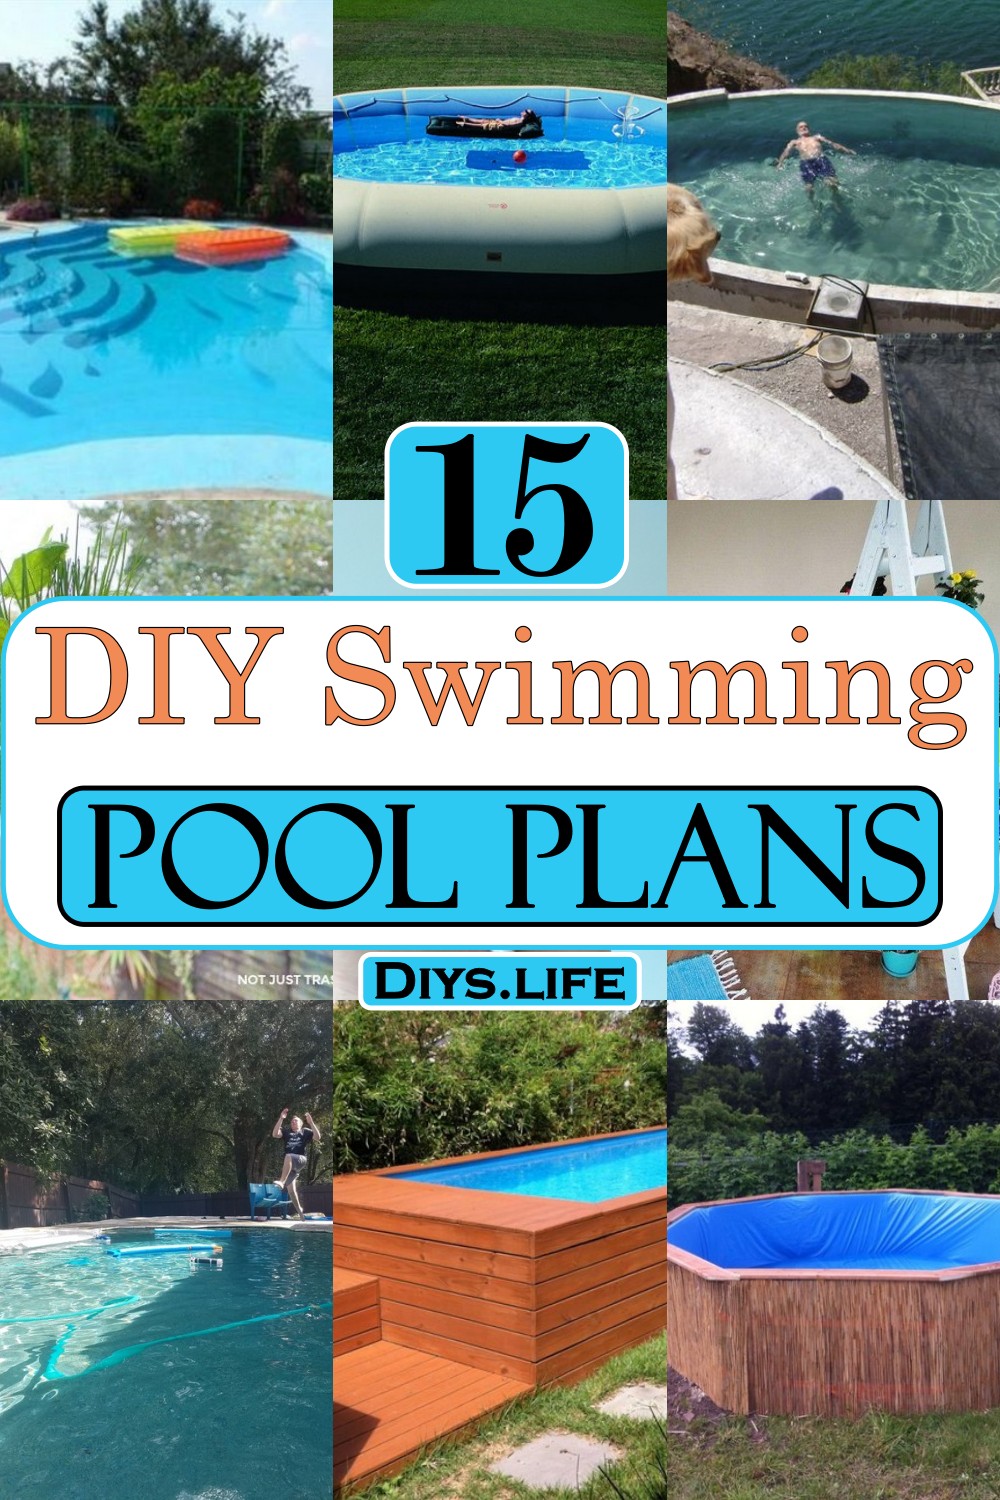 DIY Swimming Pool Plans